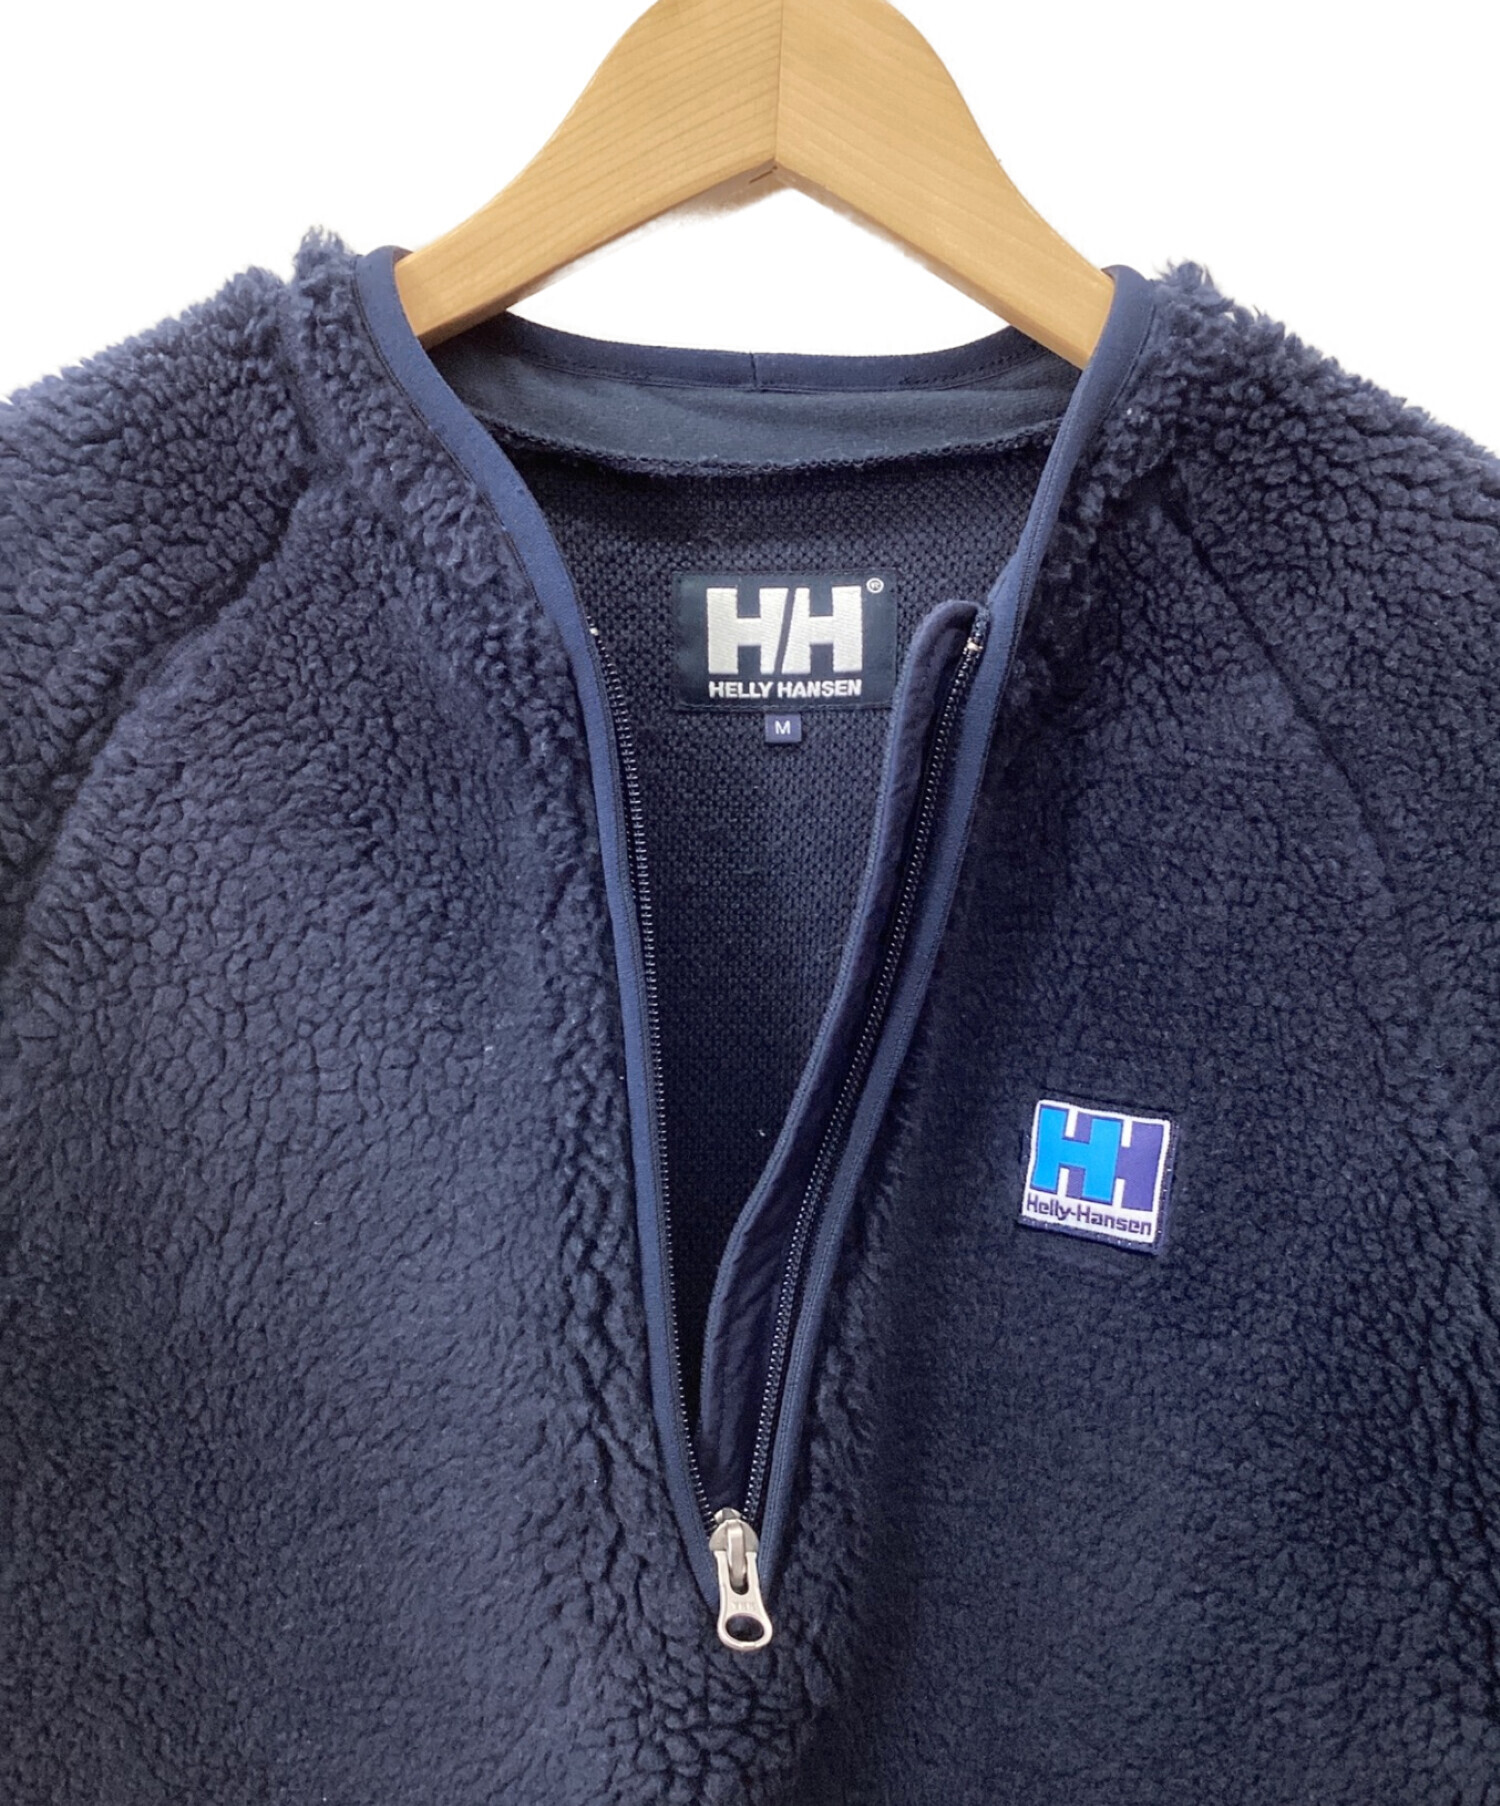 HELLY HANSEN (ヘリーハンセン) フリースジャケット ネイビー サイズ:M